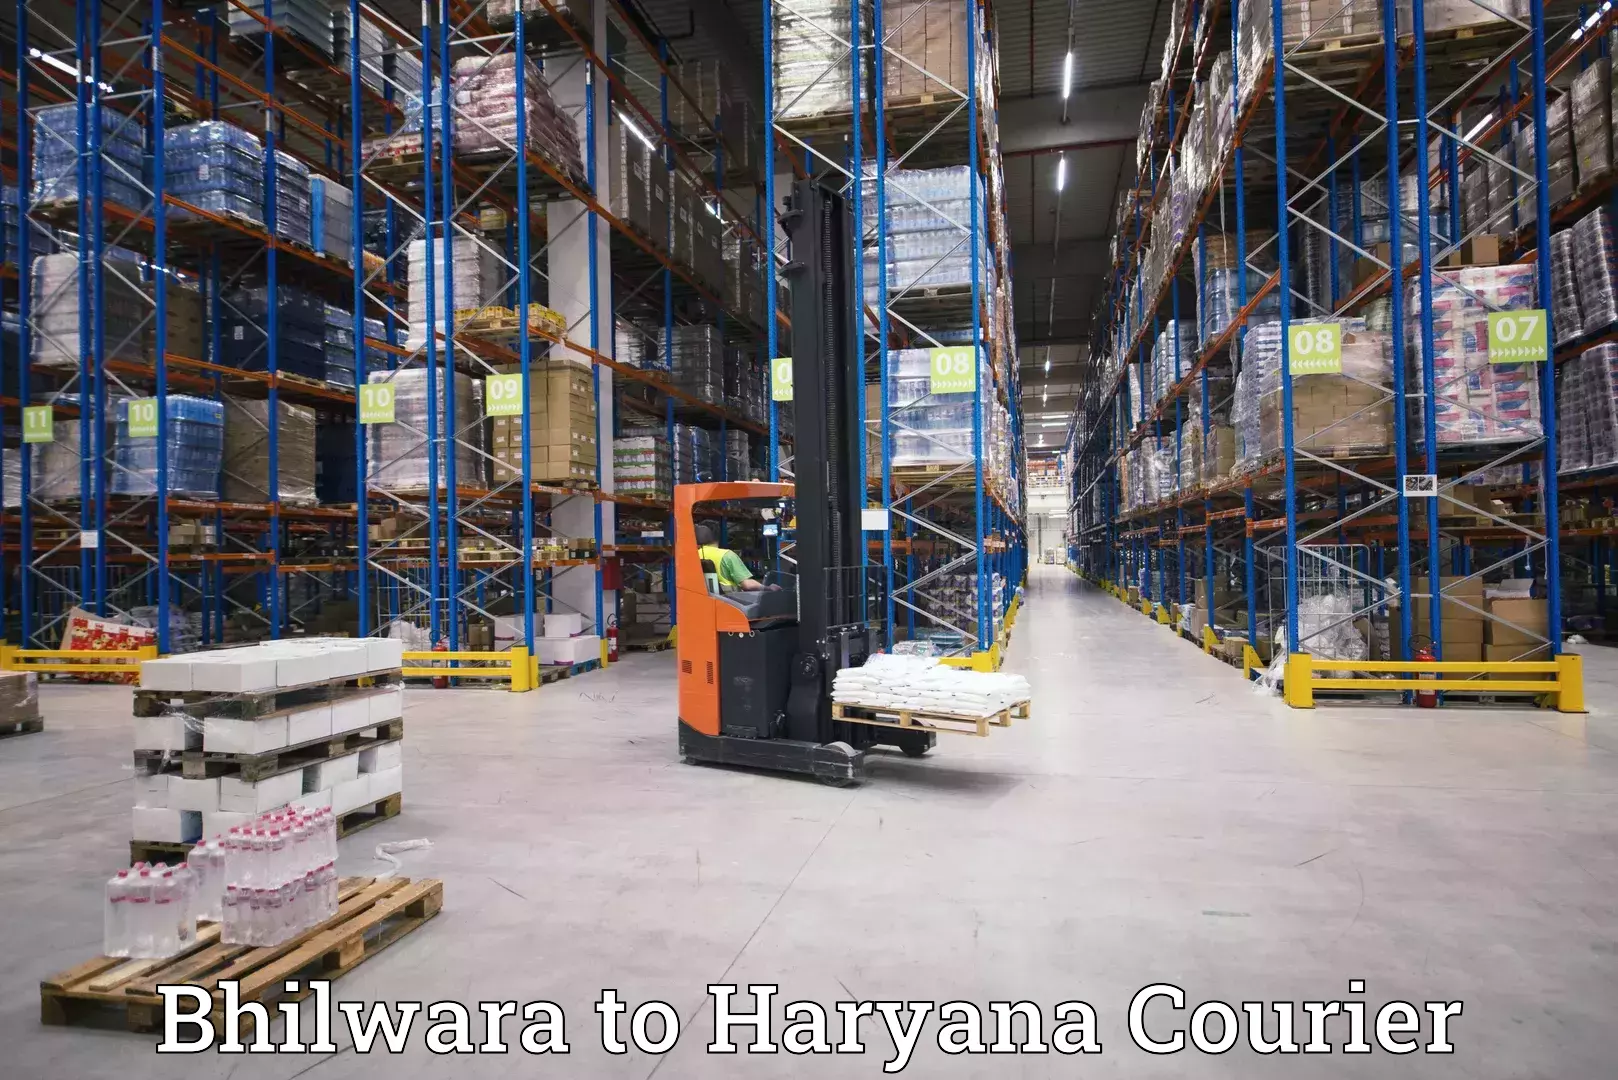 Courier service efficiency Bhilwara to Sirsa